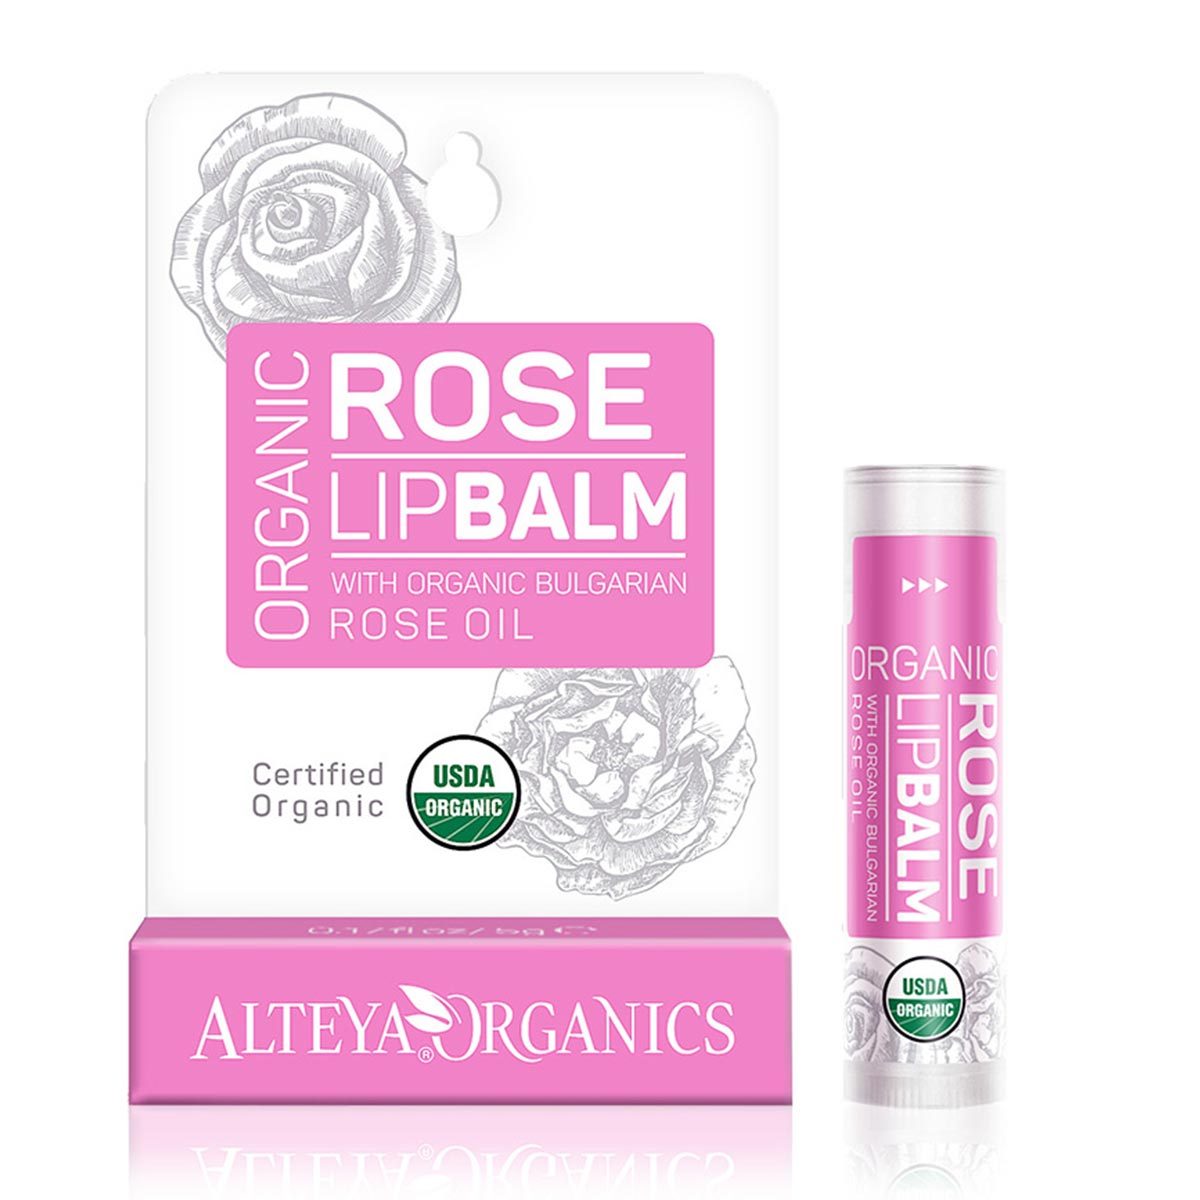 Primary image of Rose Lip Balm